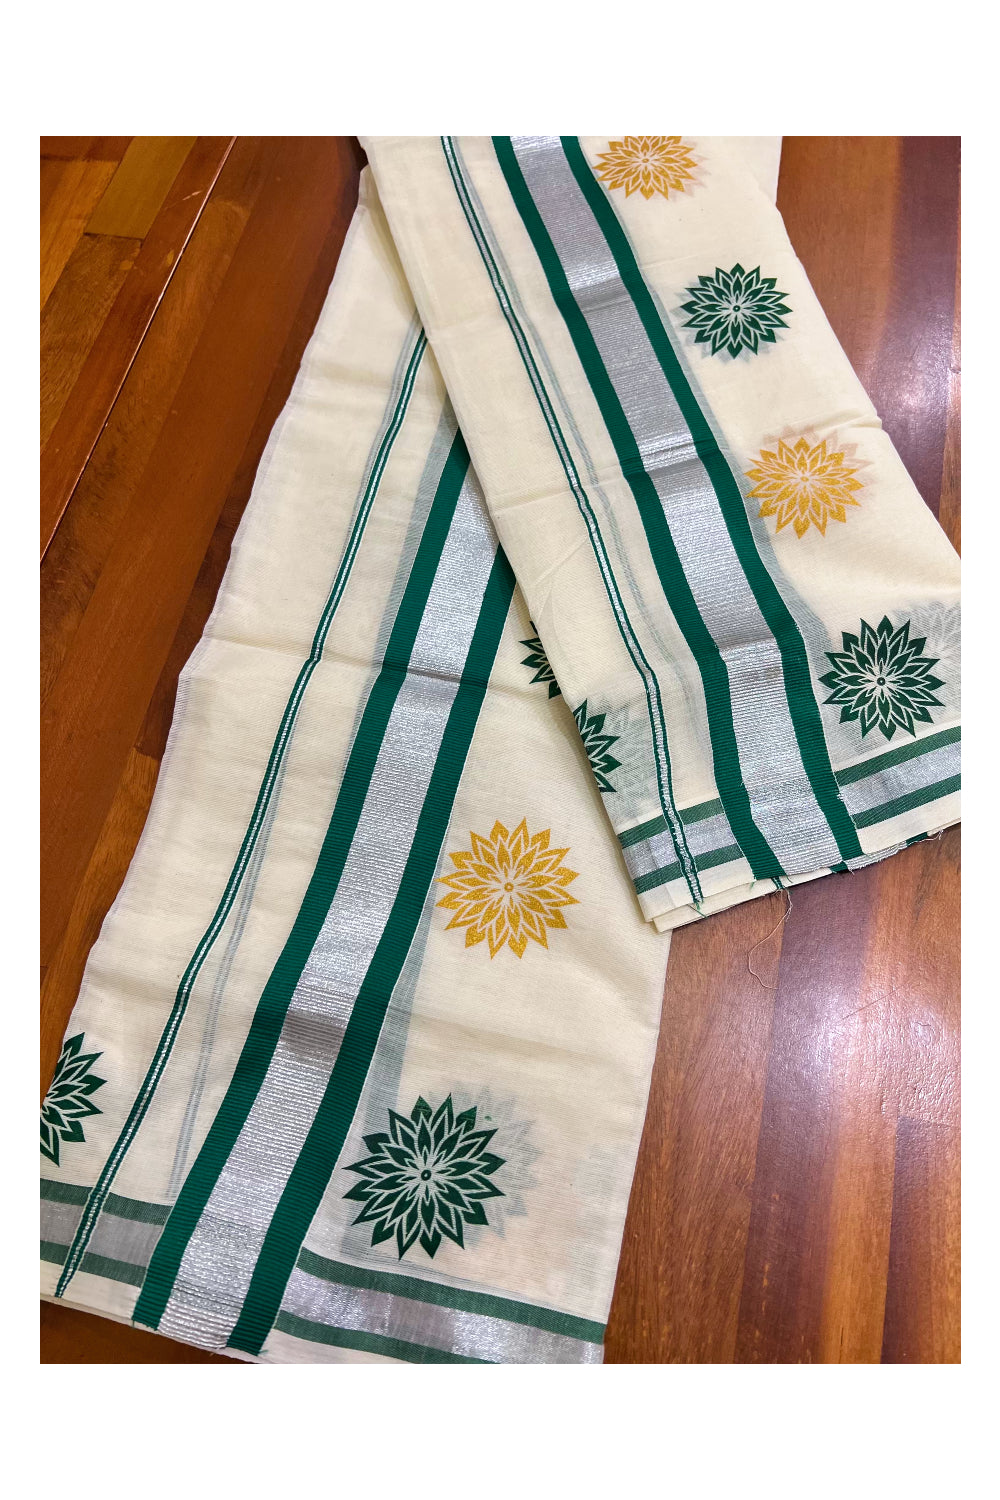 Kerala Cotton Mundum Neriyathum Single (Set Mundu) with Green and Yellow Floral Block Prints with Green Silver Kasavu Border